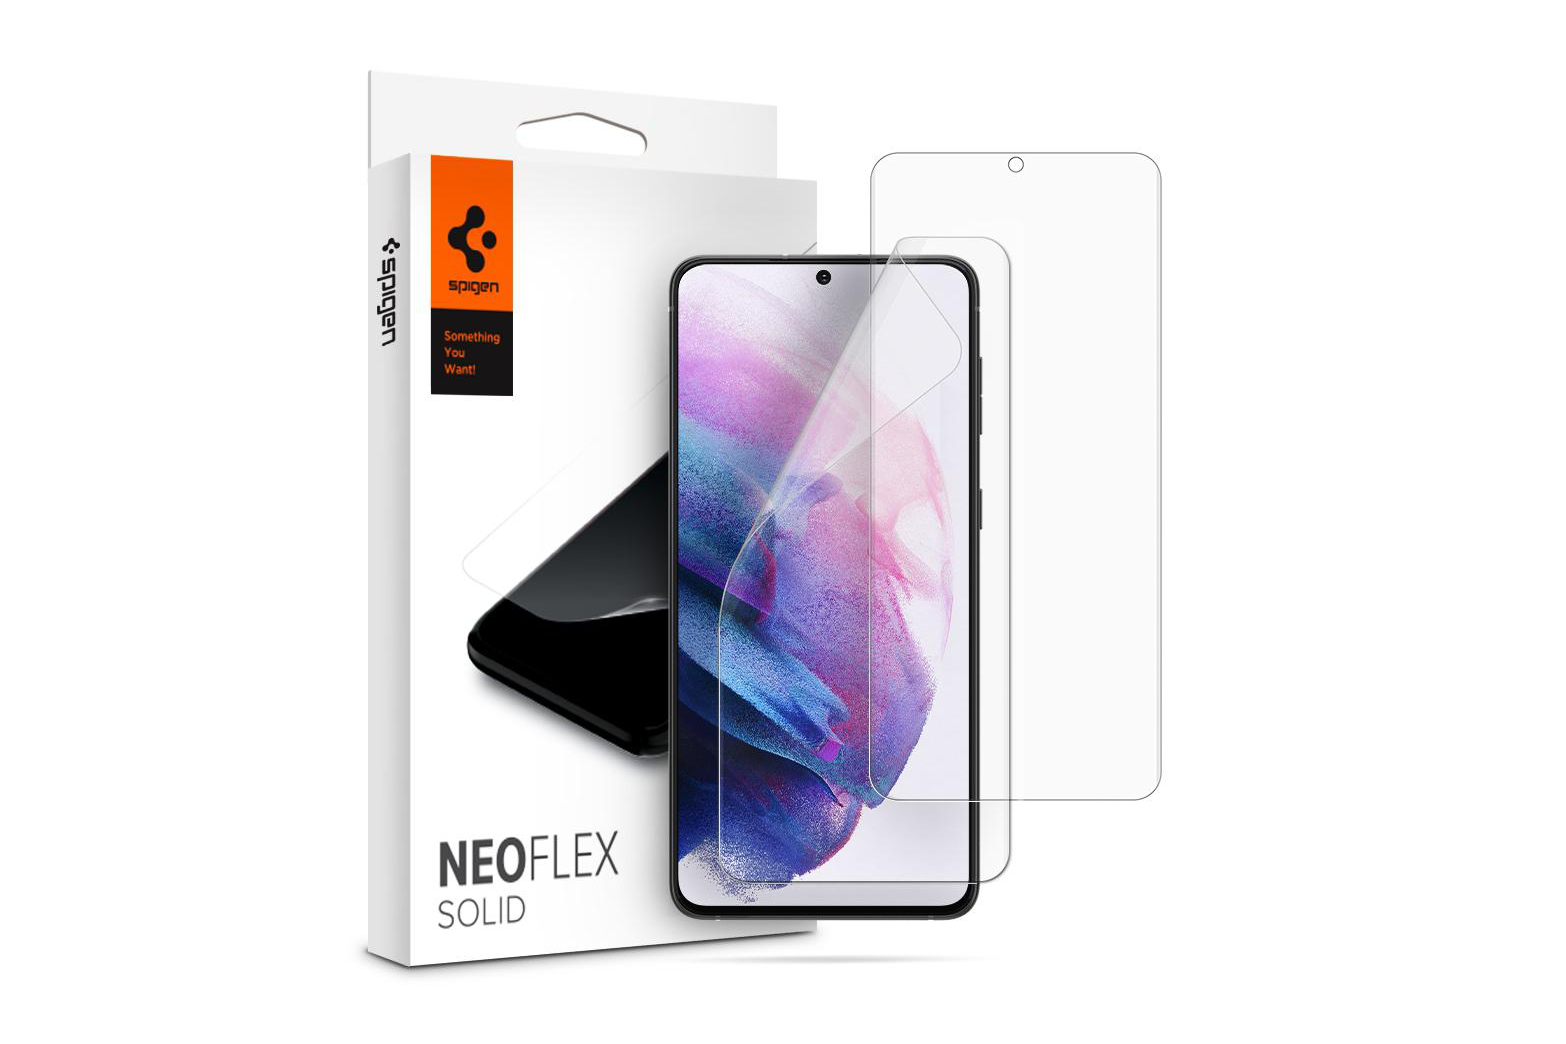 Protector de pantalla Spigen Neo Flex Solid para Samsung Galaxy S21 Ultra.